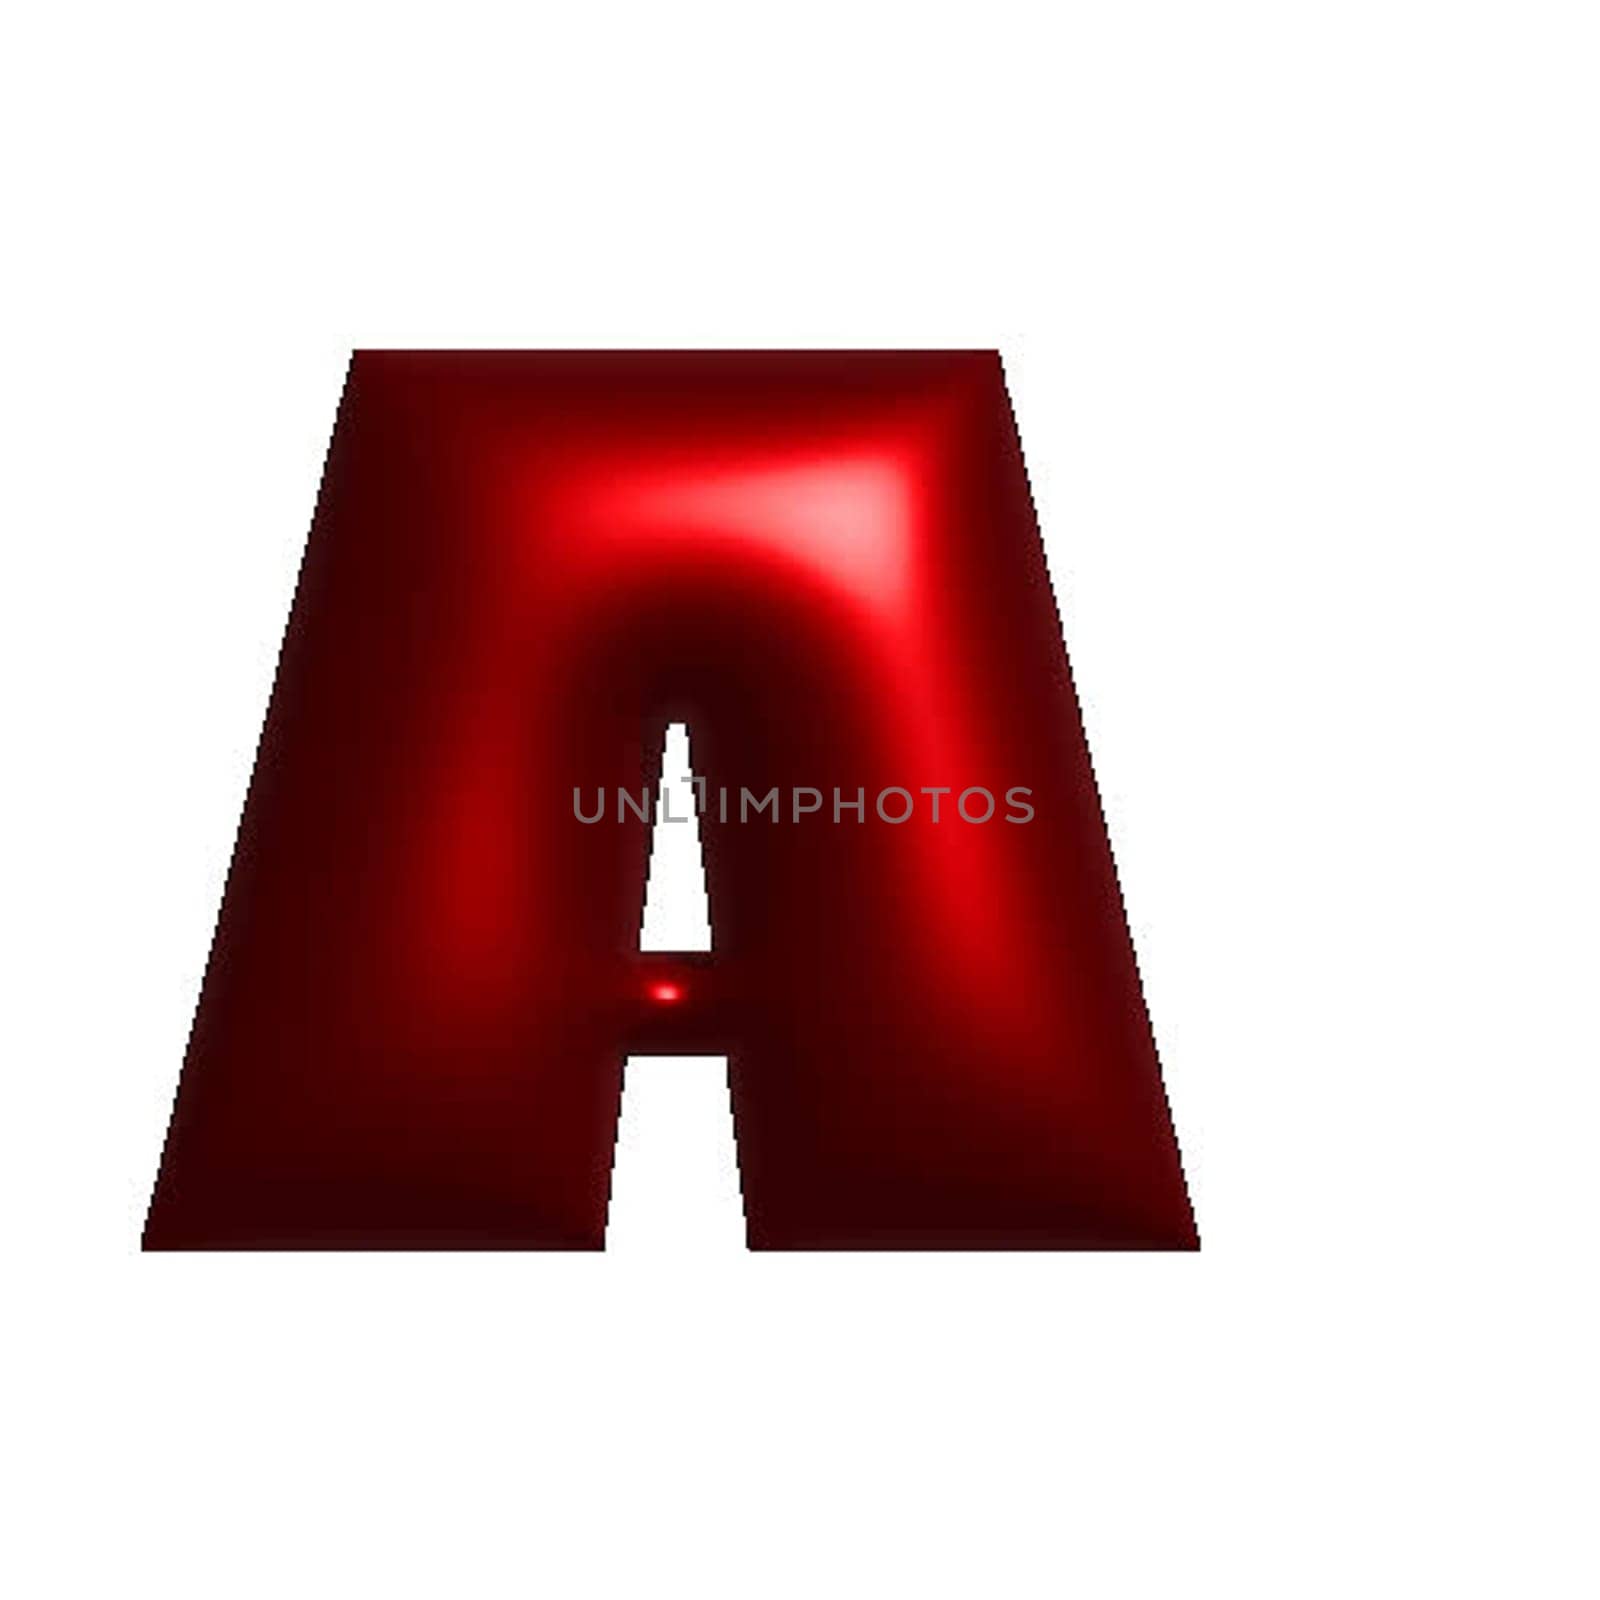 Red shiny metal letter A 3D illustration